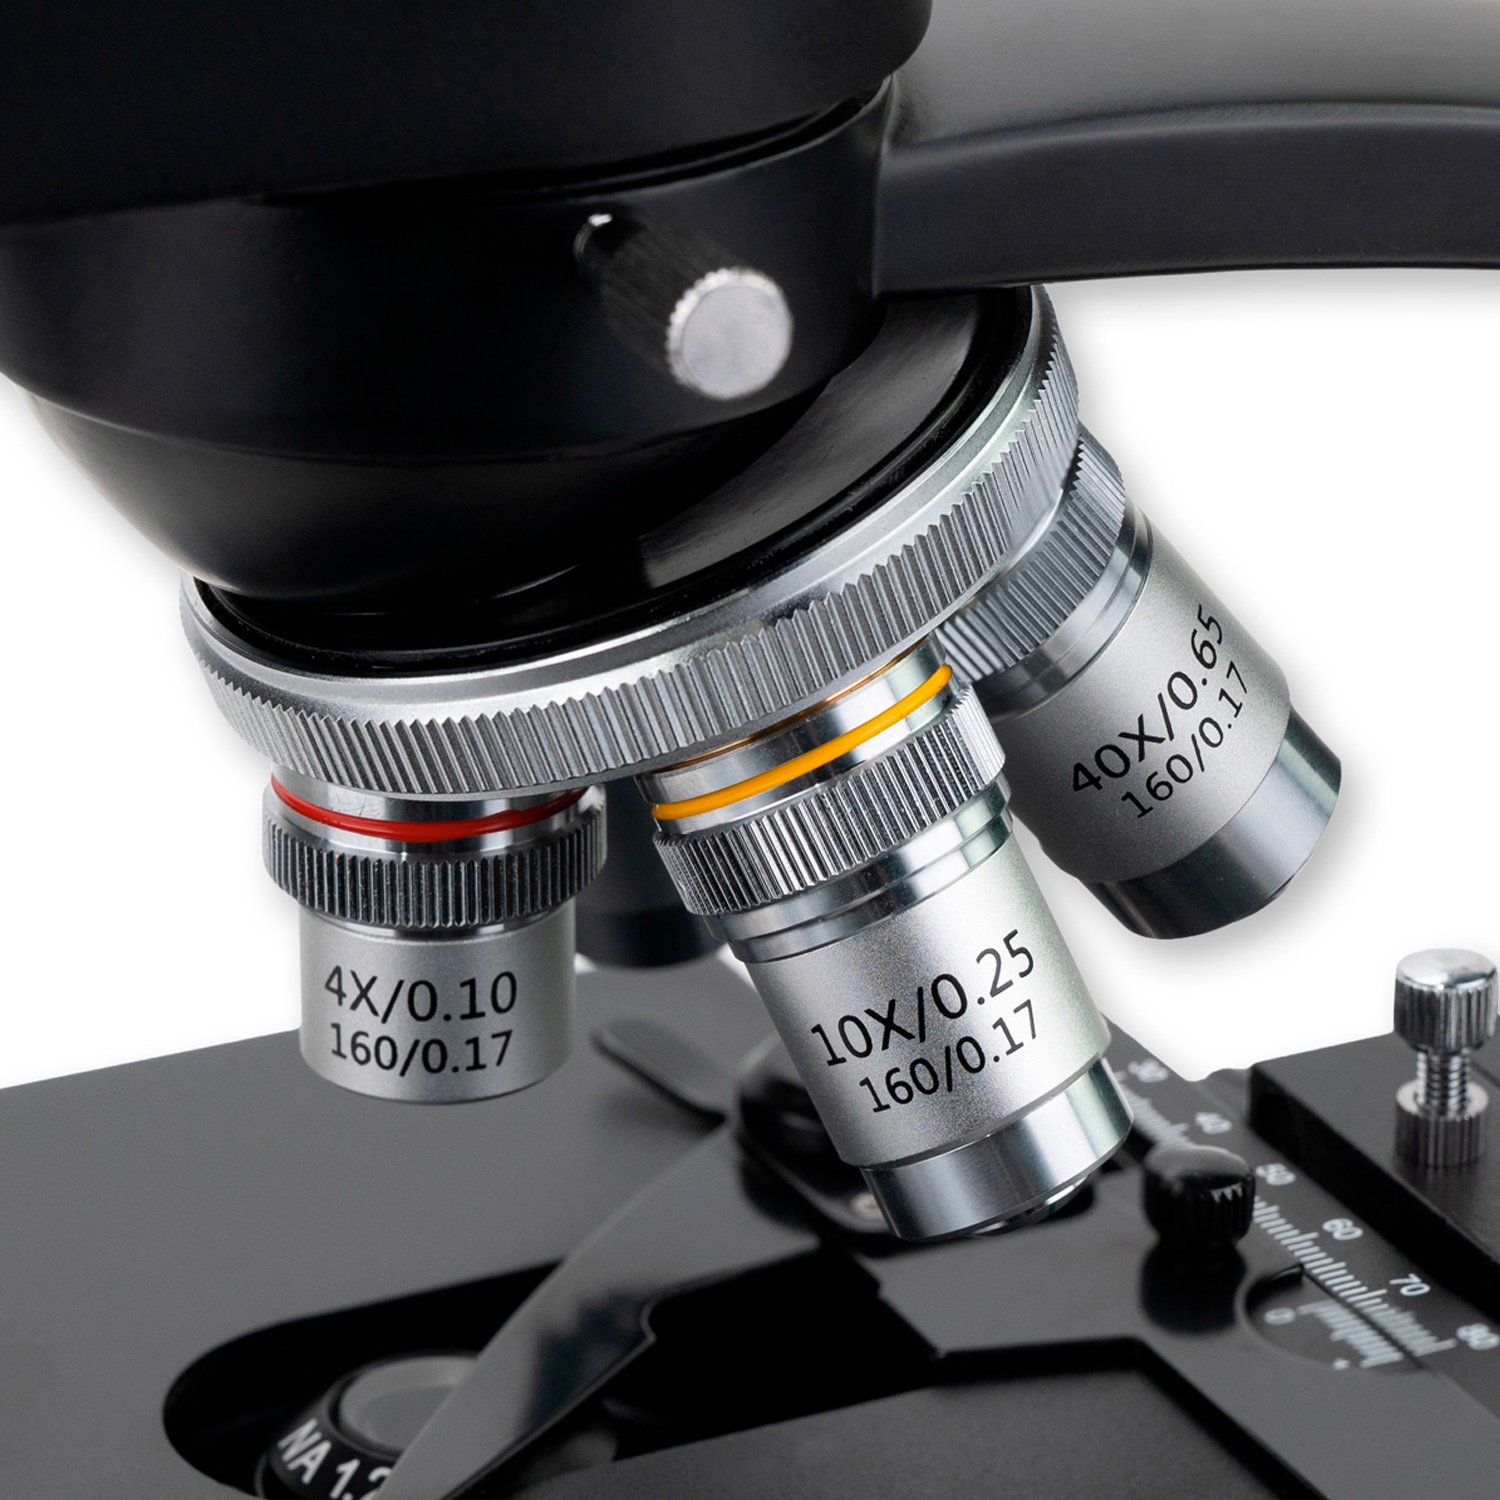 Magnification, Microscopy, Optics & Lenses